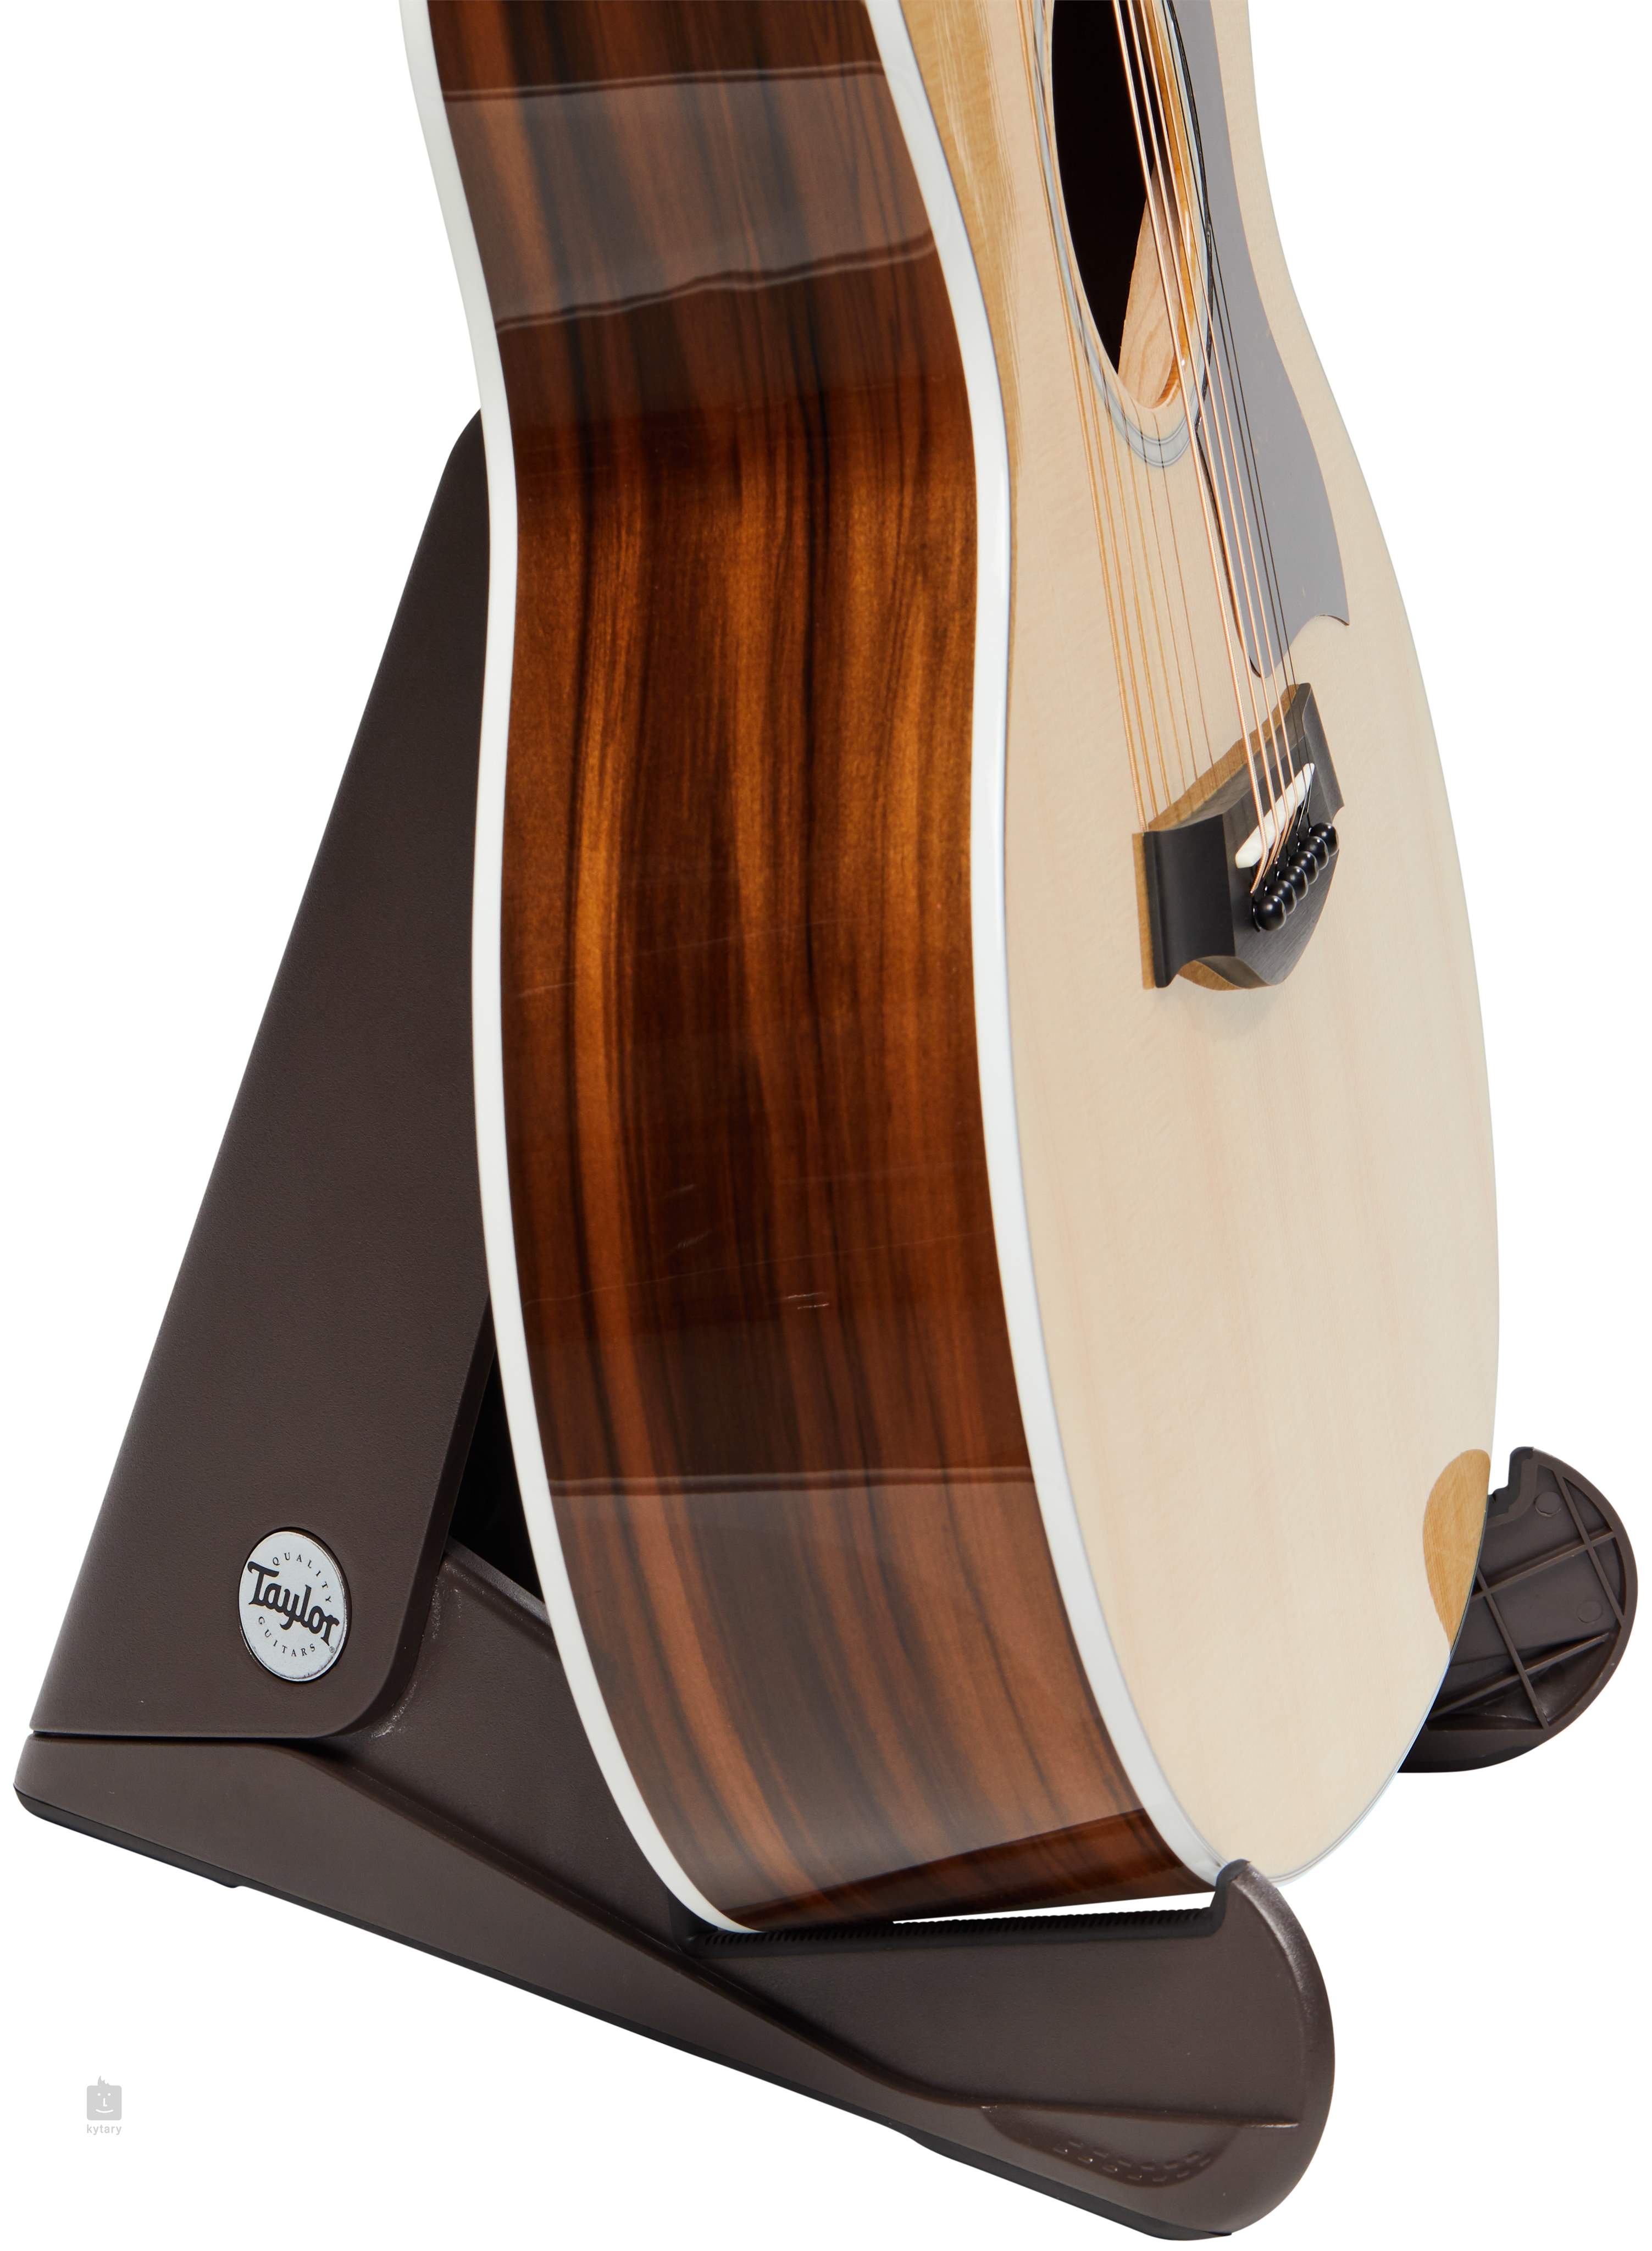 https://img.kytary.com/eshop_fr/velky_v2/na/637202084625630000/d731b77c/64734677/taylor-compact-folding-acoustic-guitar-stand.jpg